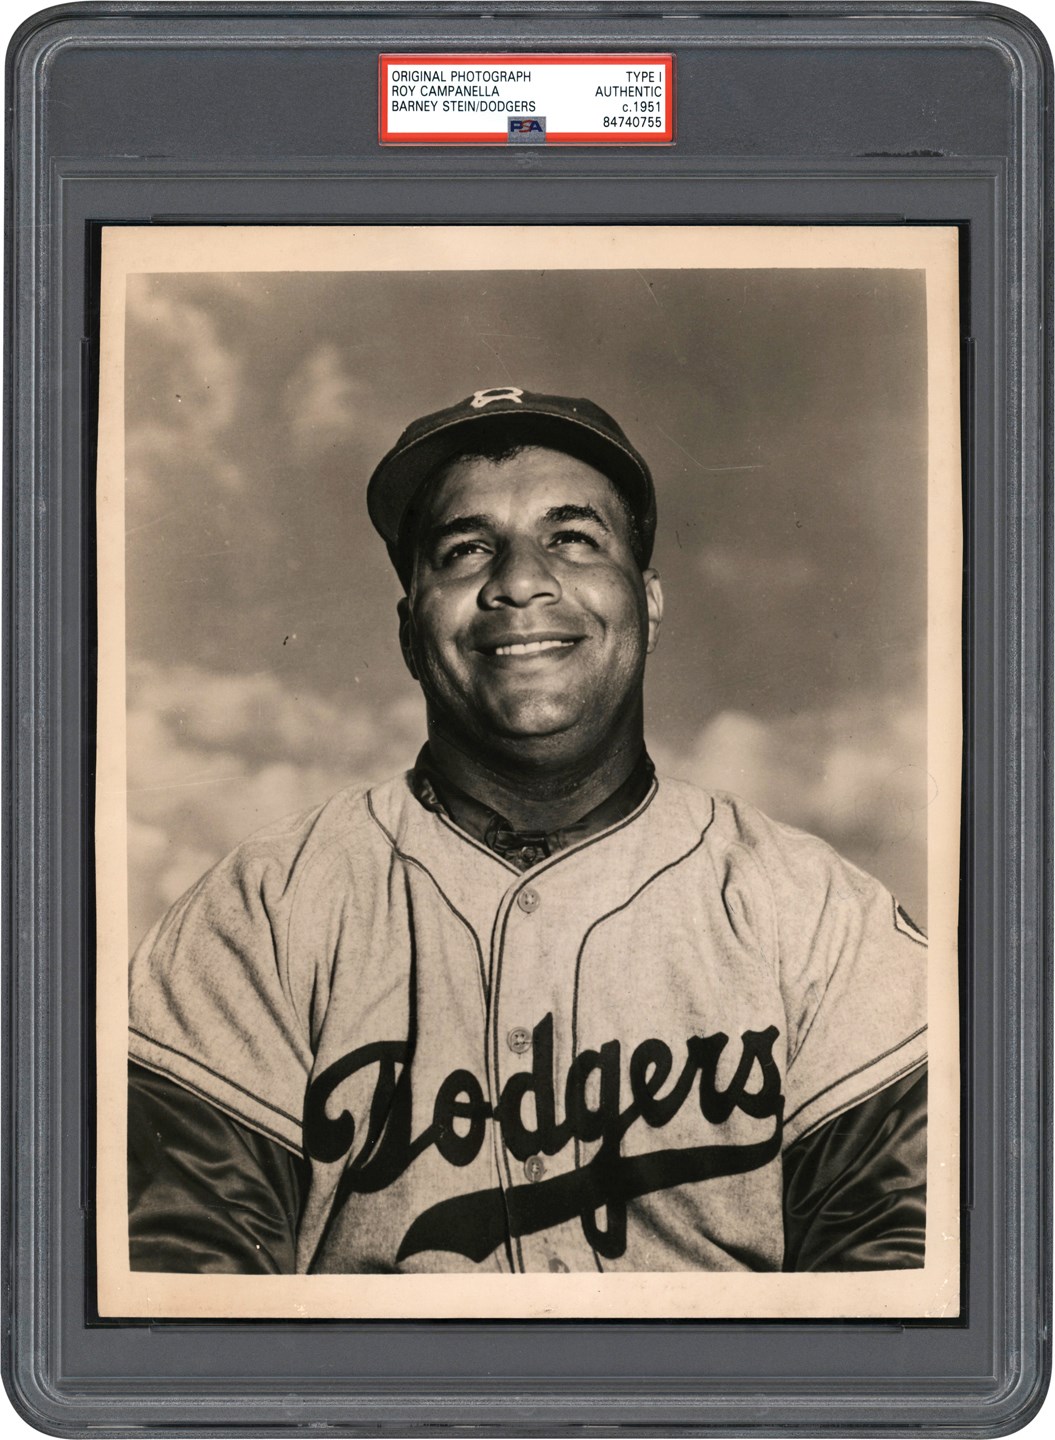 Vintage Sports Photographs - 1951 Roy Campanella Brooklyn Dodgers Photograph (PSA Type I)